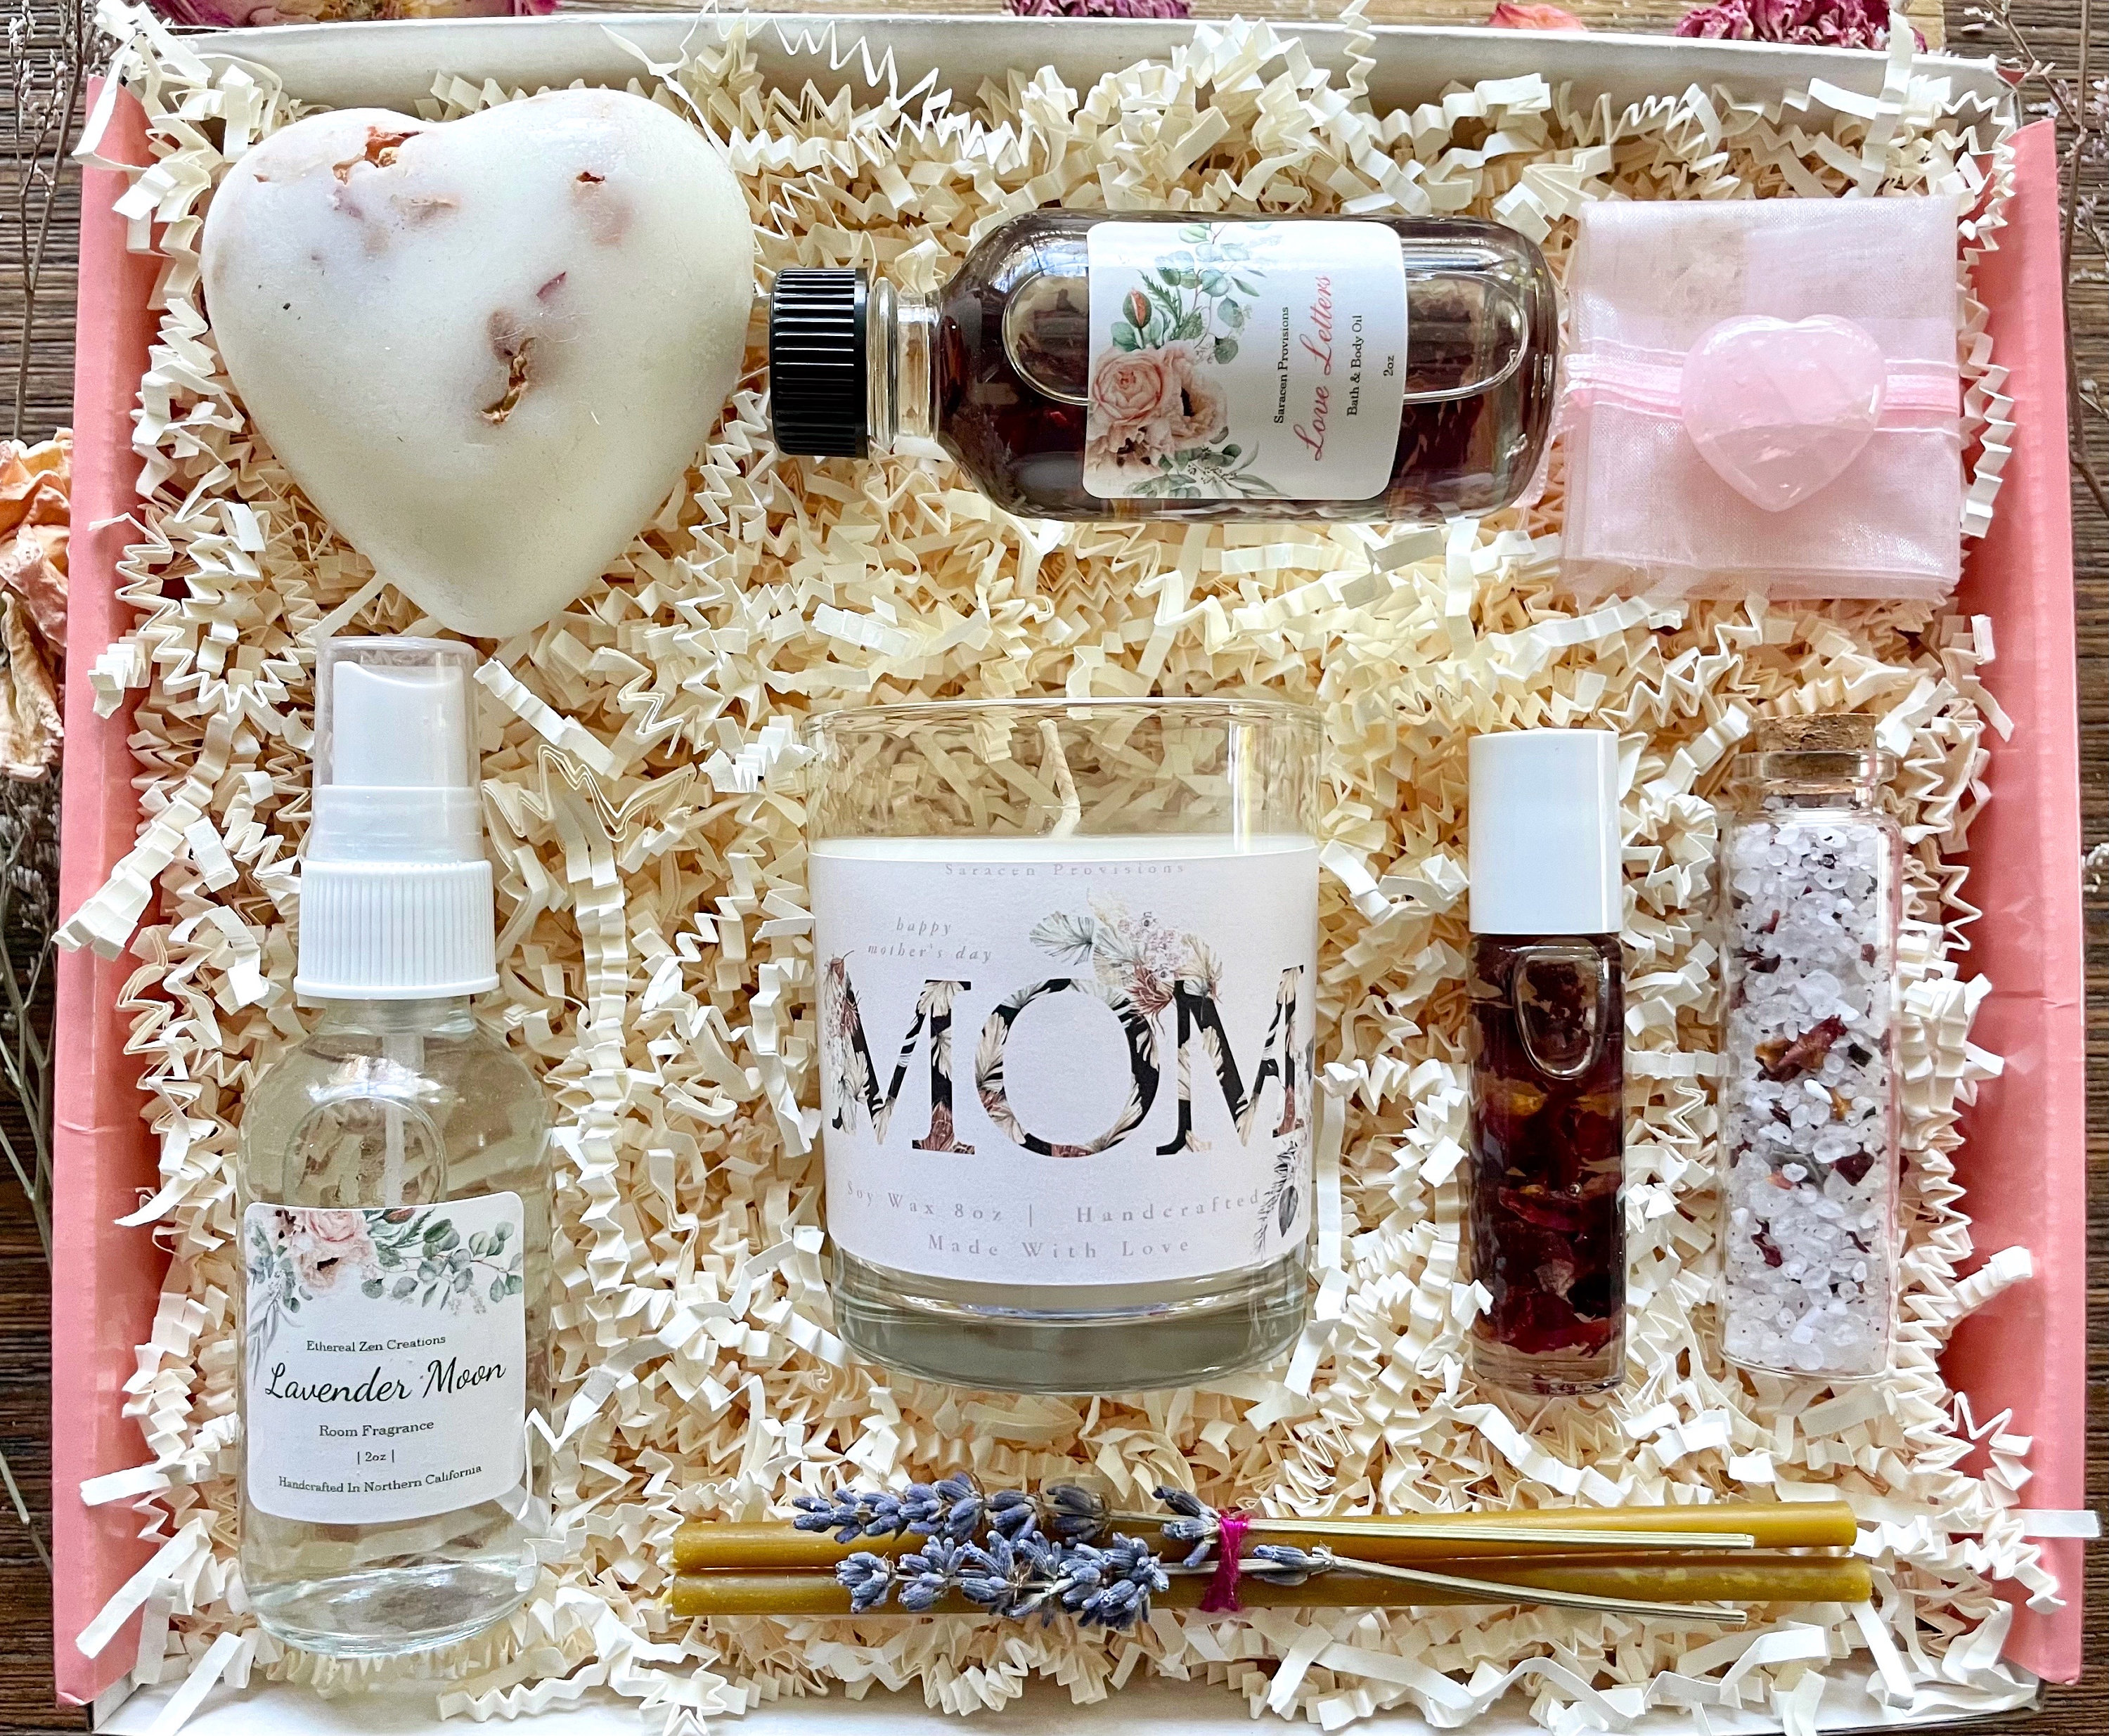 DIY Self-Care Kit Bath Gift Basket - Mom Endeavors